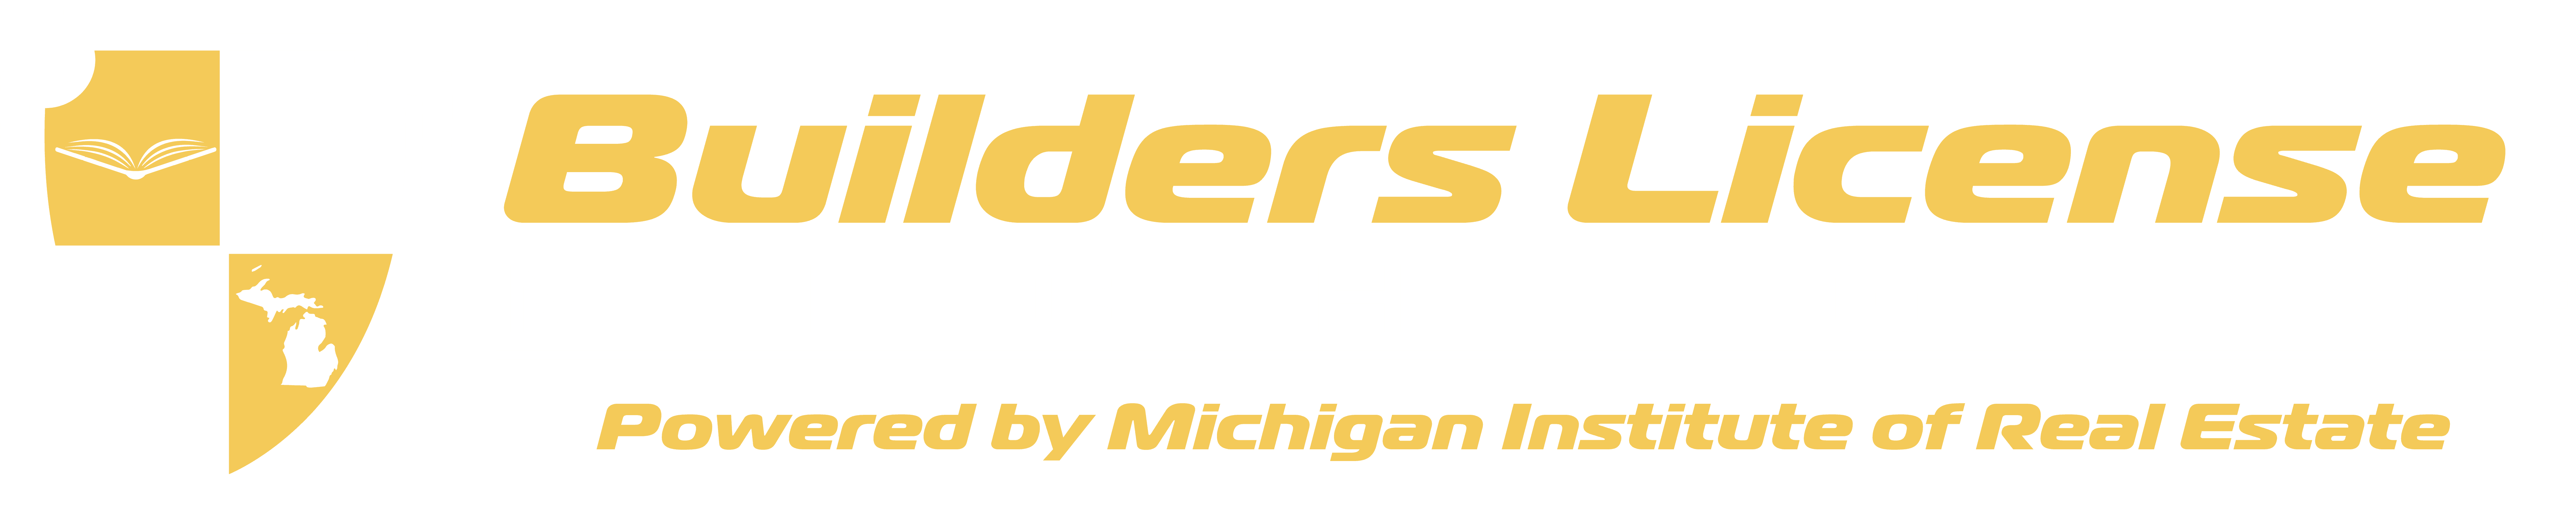 Michigan Builders License Online courses, classes & test preparation